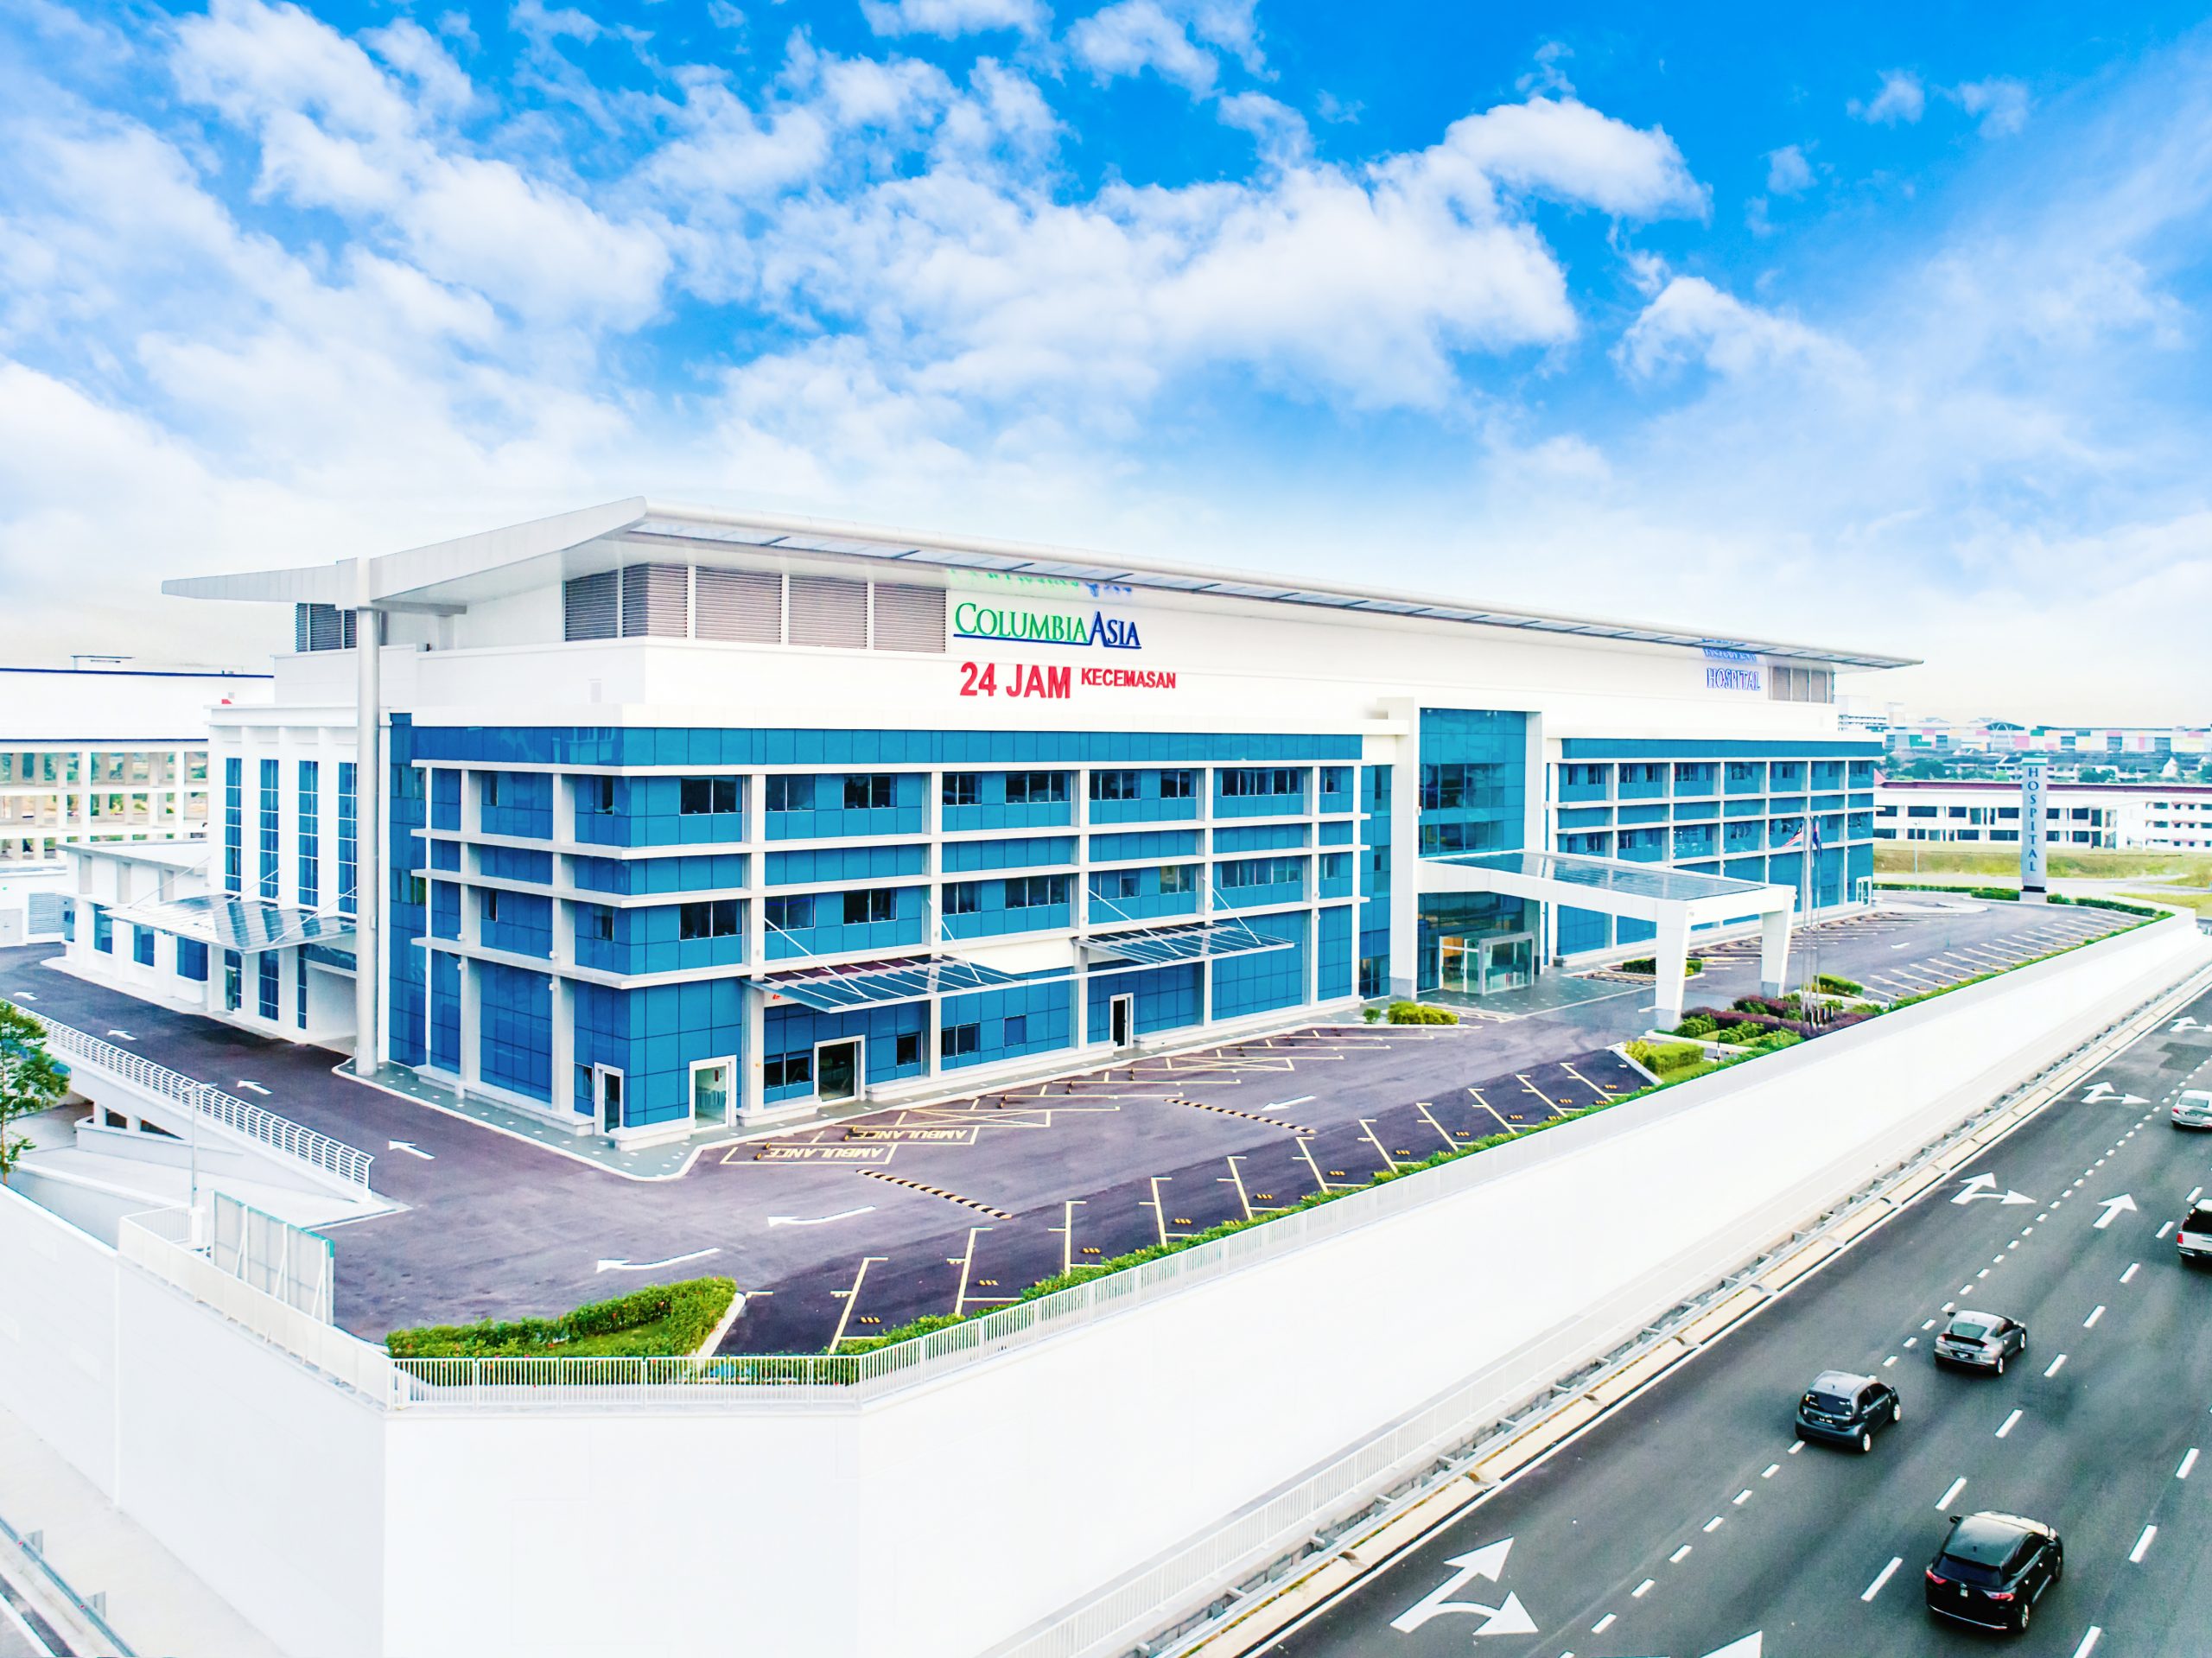 Hospital Columbia Asia Terbesar di Malaysia dibuka di Tebrau